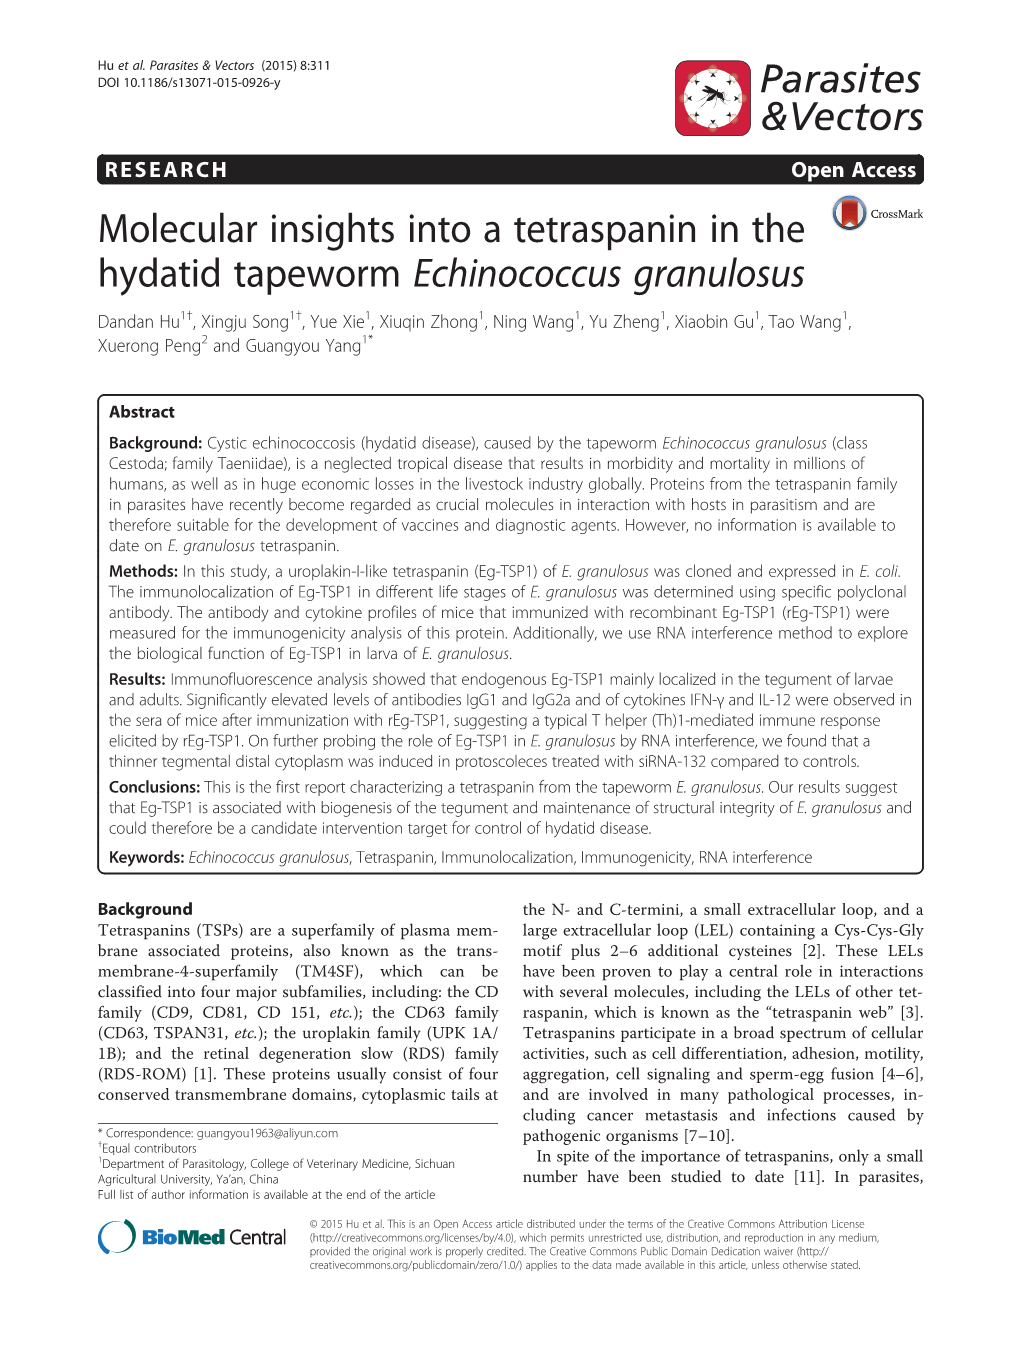 Molecular Insights Into a Tetraspanin in the Hydatid